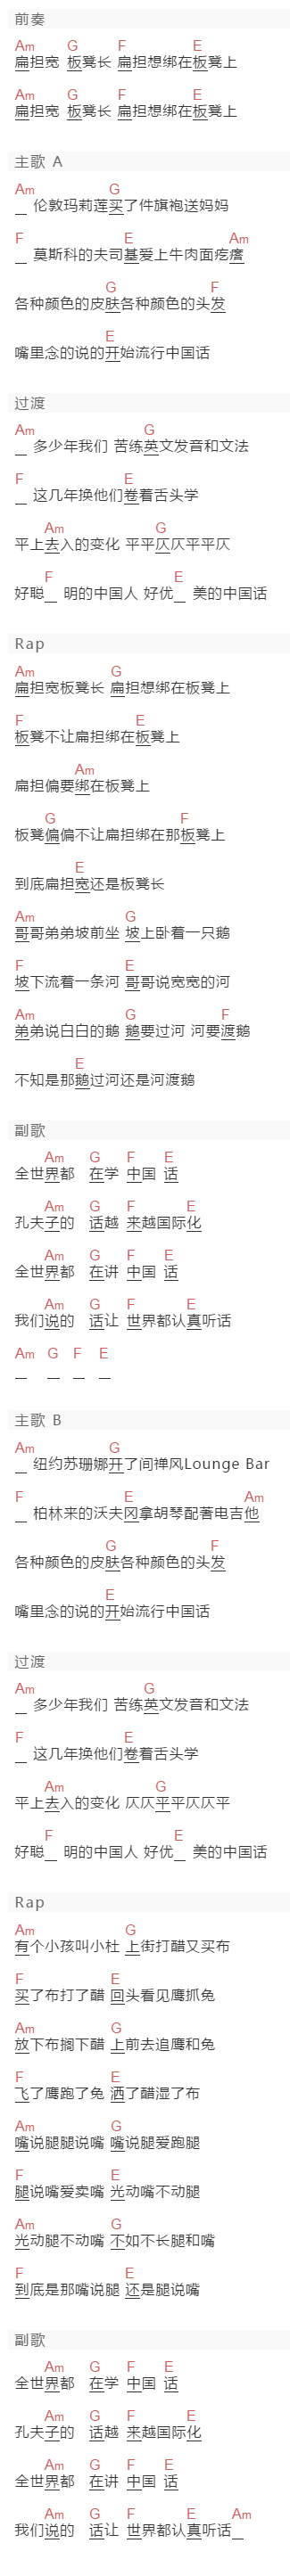 S.H.E《中国话》吉他谱C调和弦谱(txt)1